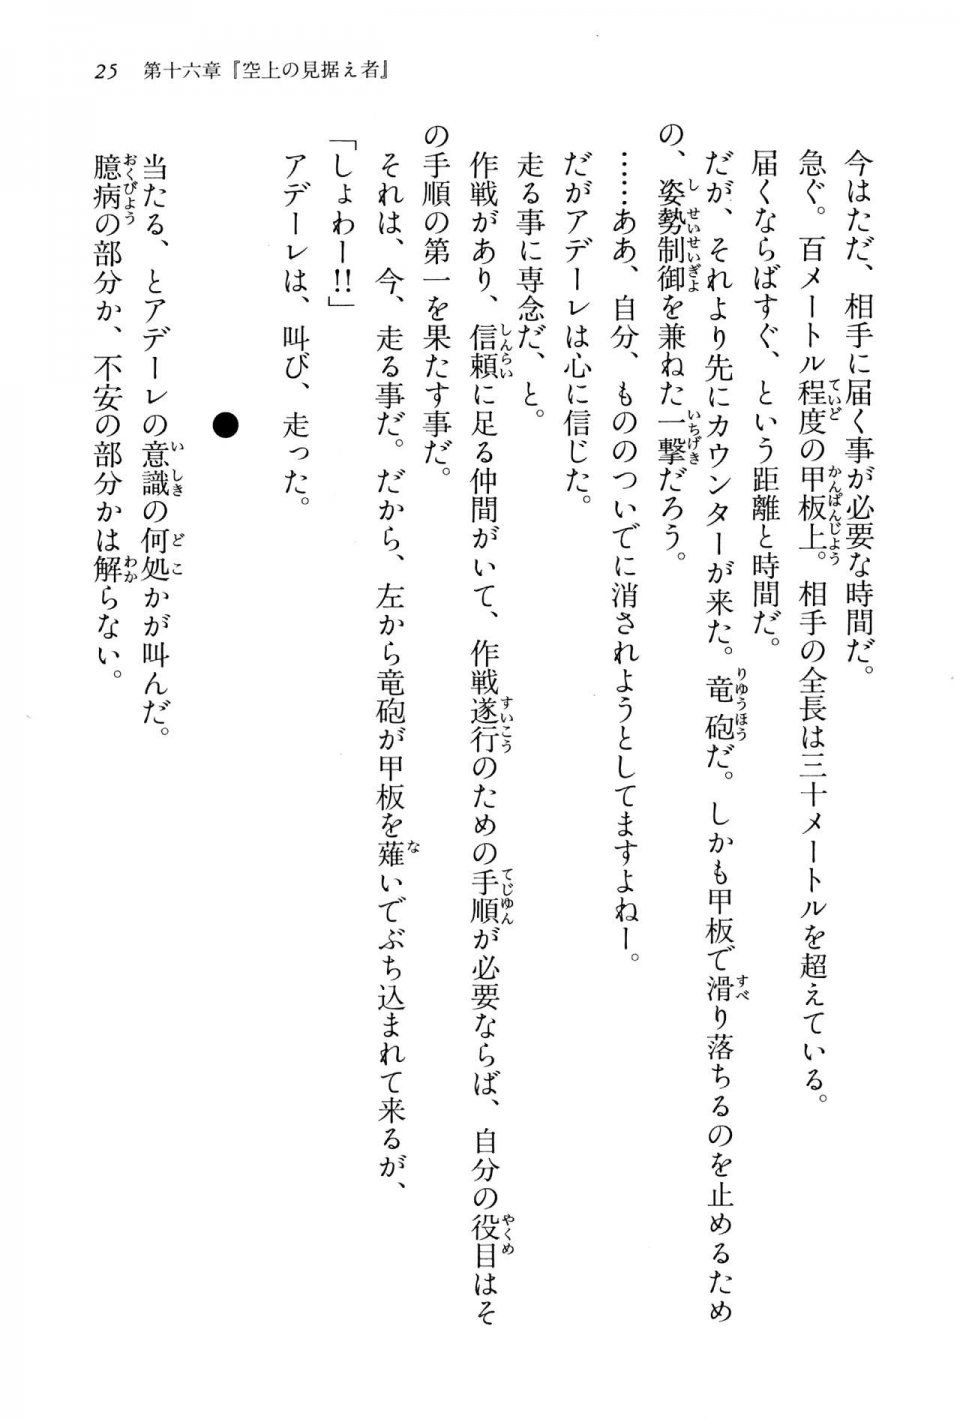 Kyoukai Senjou no Horizon BD Special Mininovel Vol 4(2B) - Photo #29